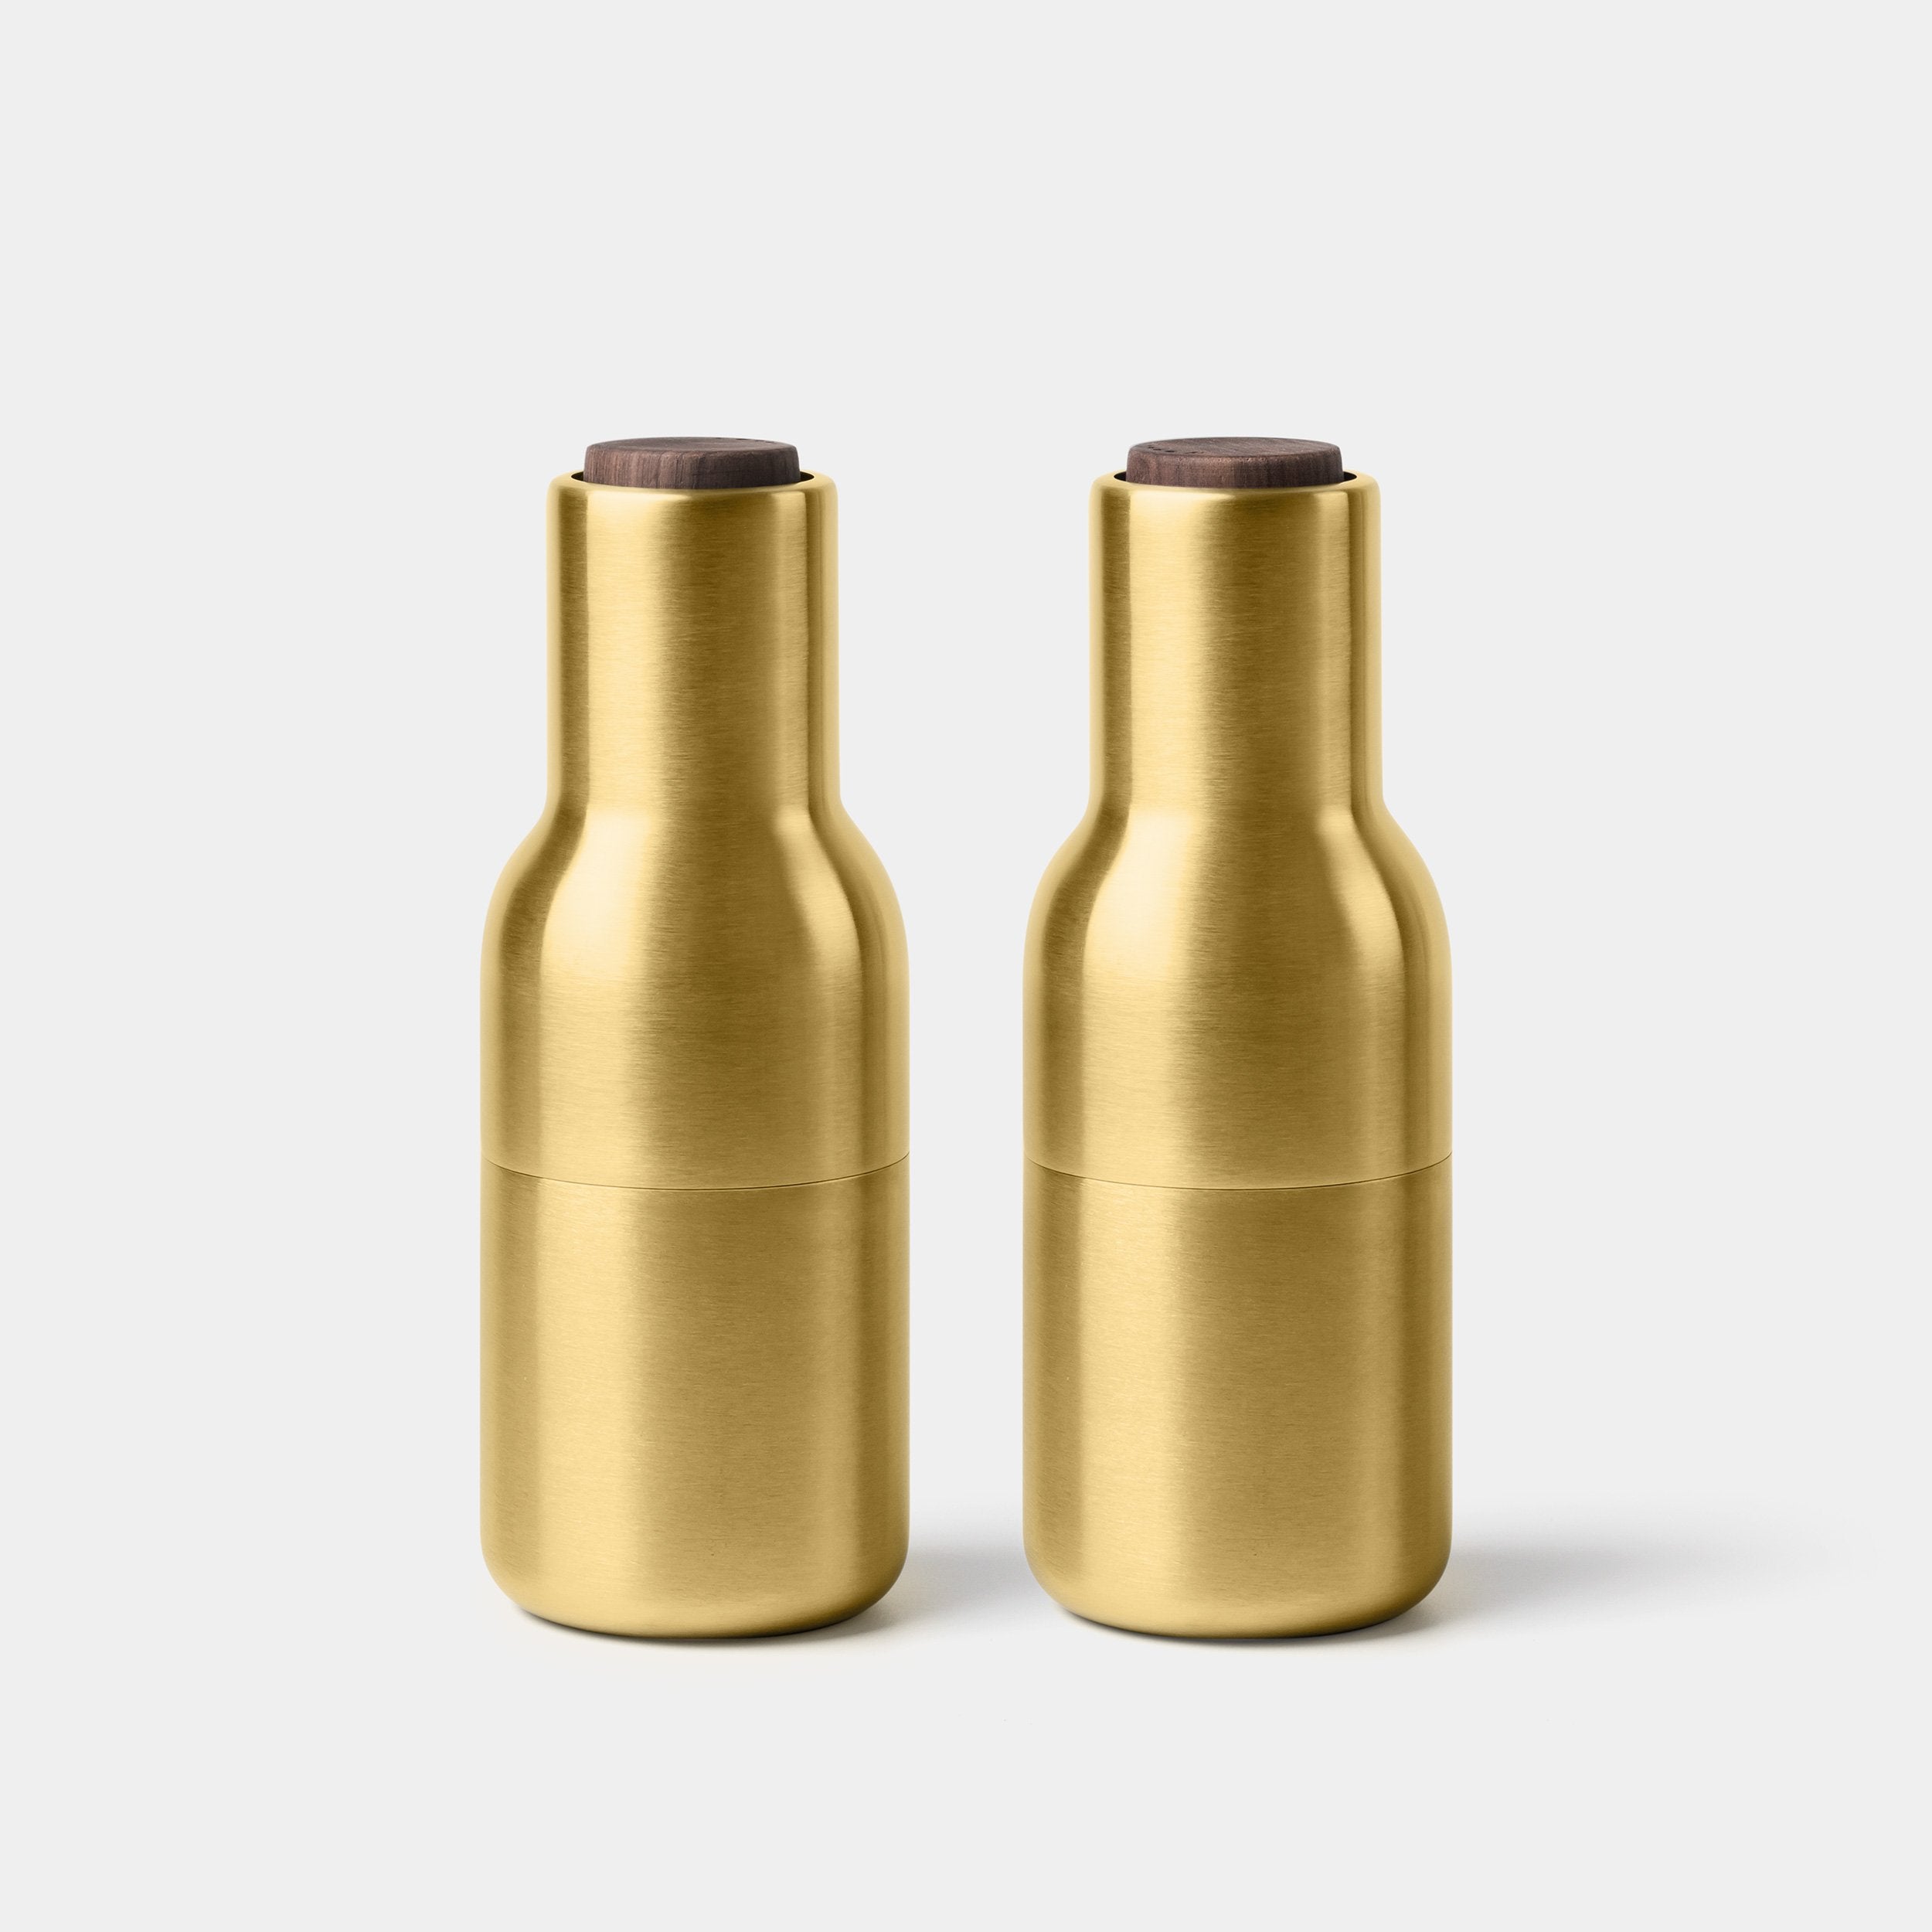 Bottle Grinder Set by Norm Architects